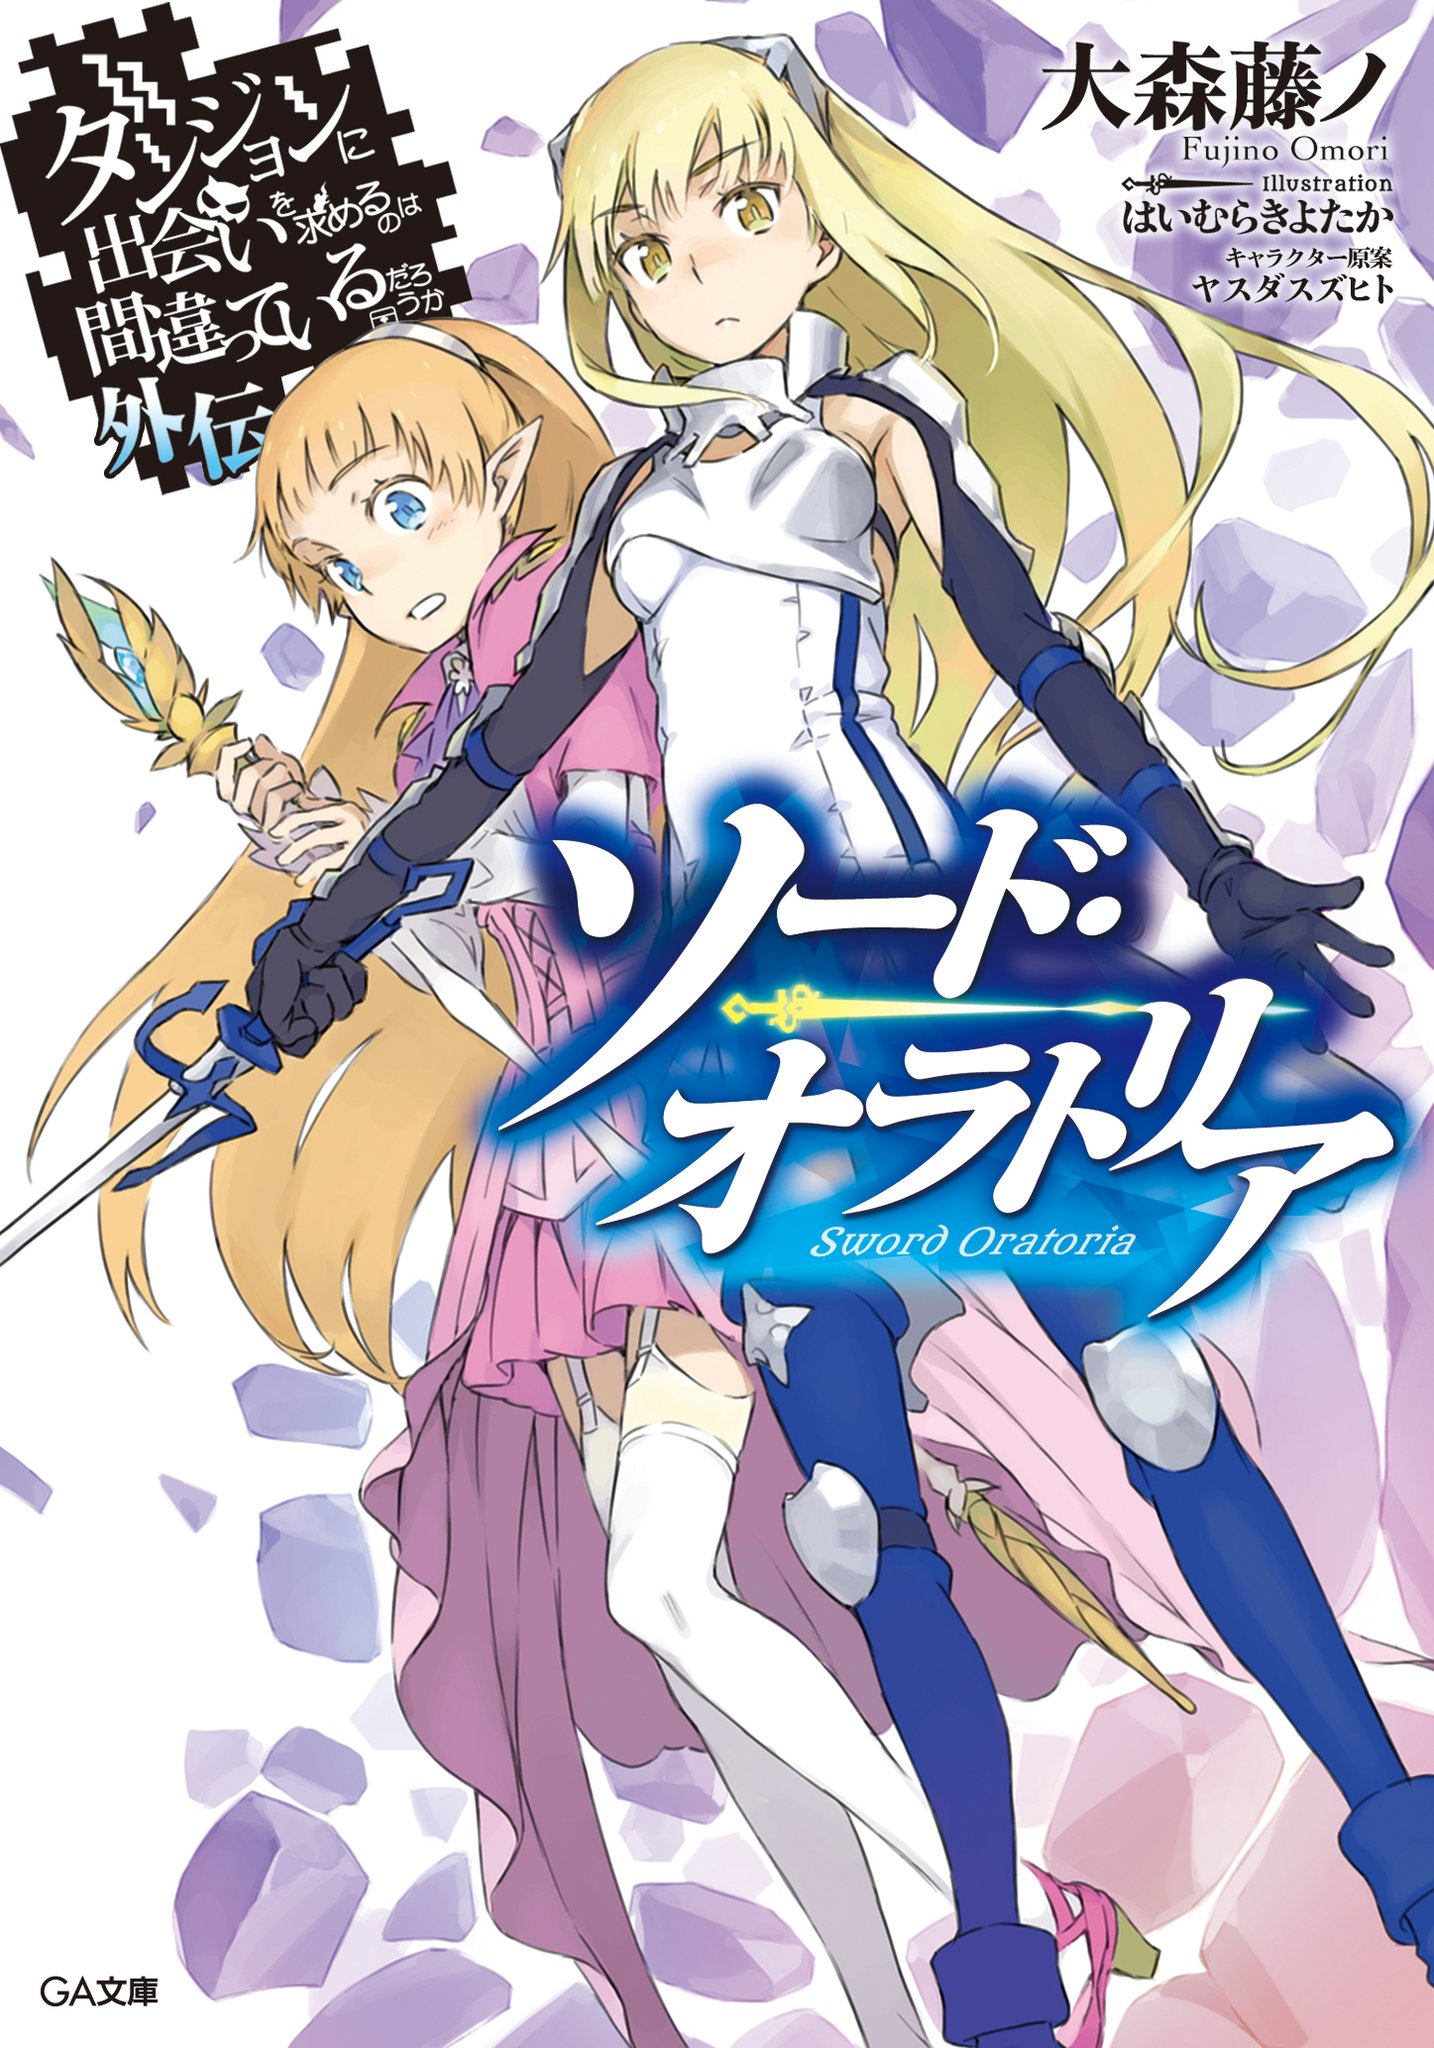 Sword Oratoria Anime vs Light Novel (Ep 1 – 2) – Anime in Asia